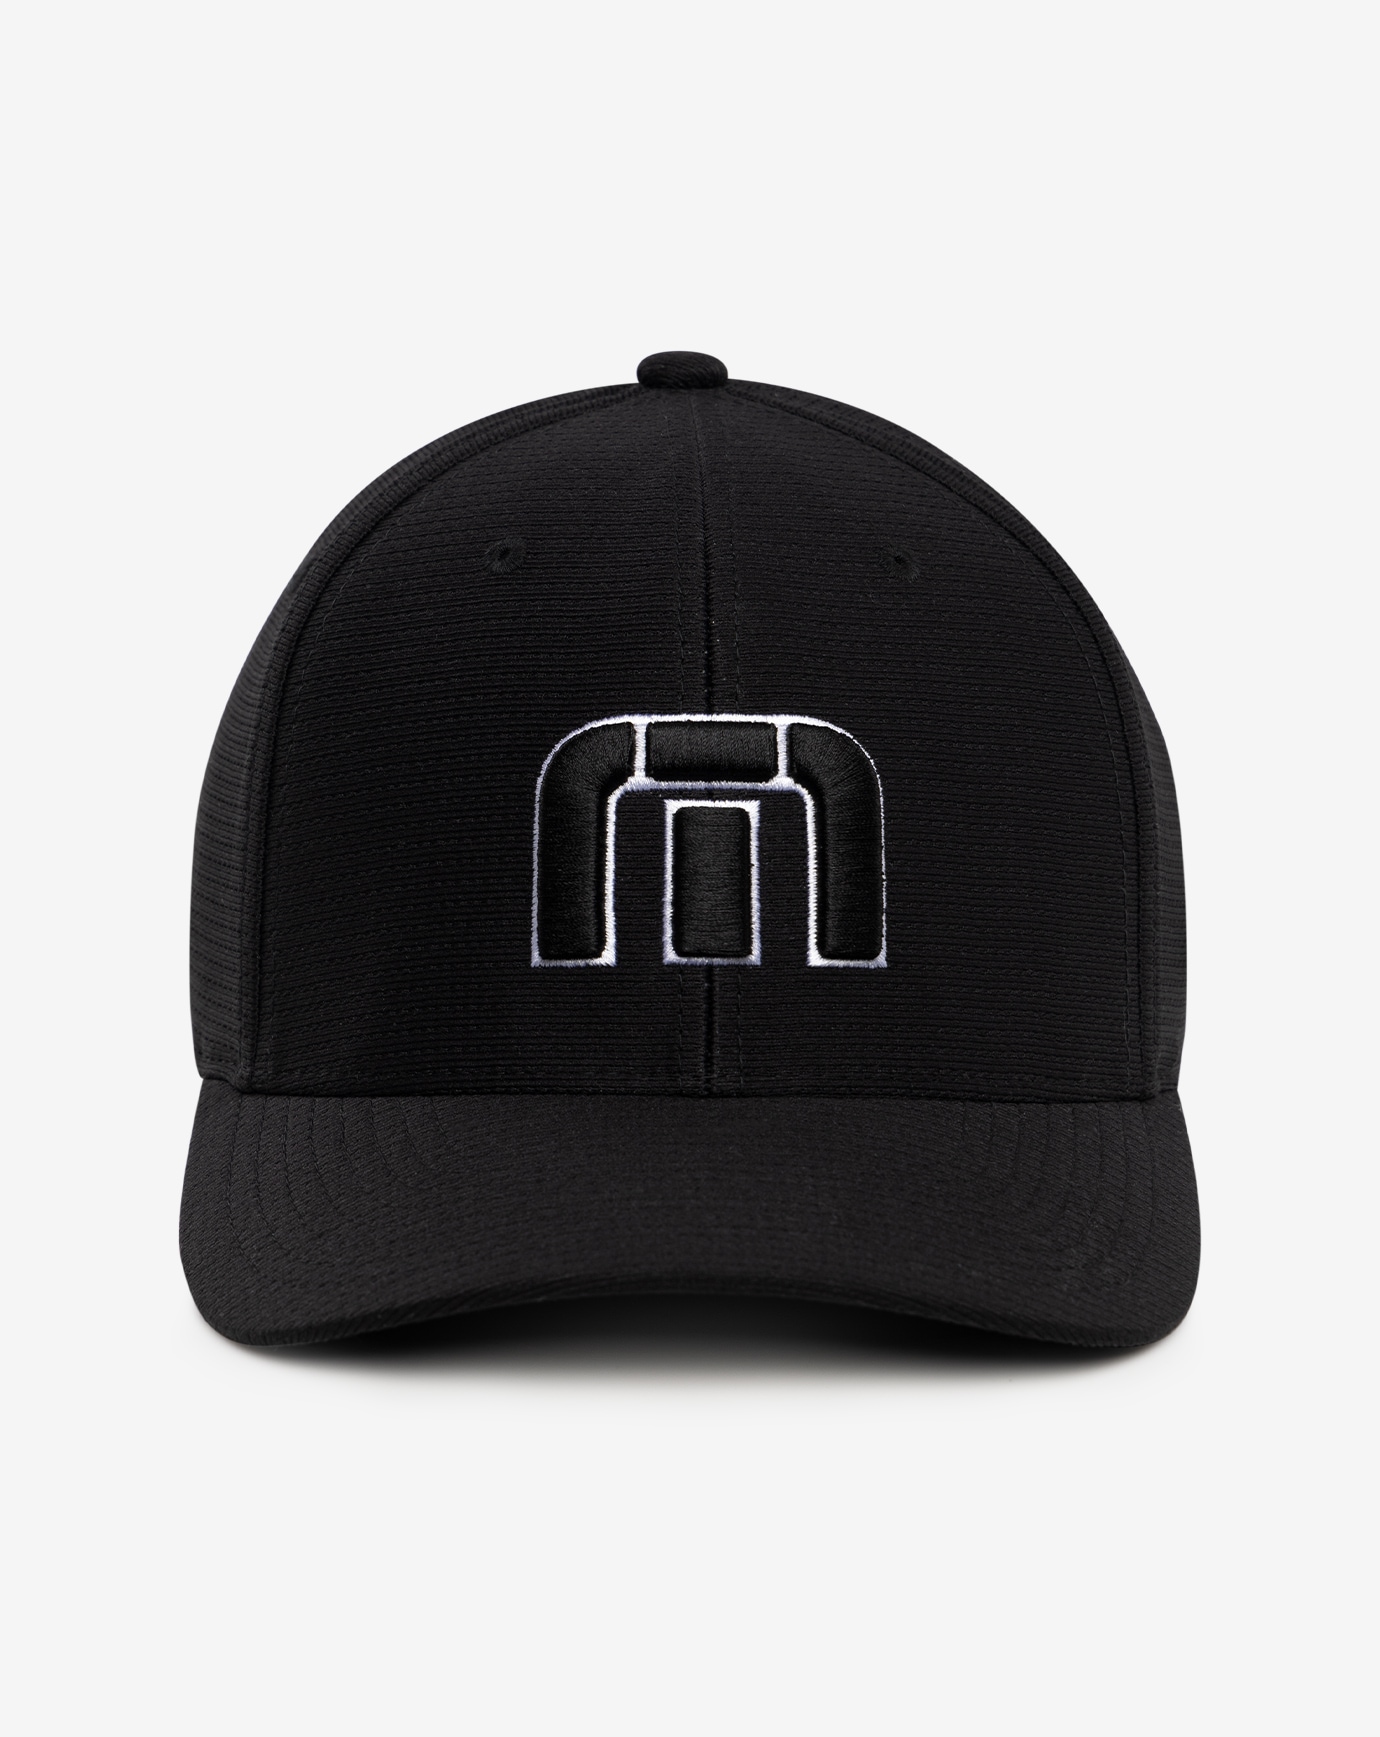 TravisMathew Men's Nassau Golf Hat, Small/Medium, Black